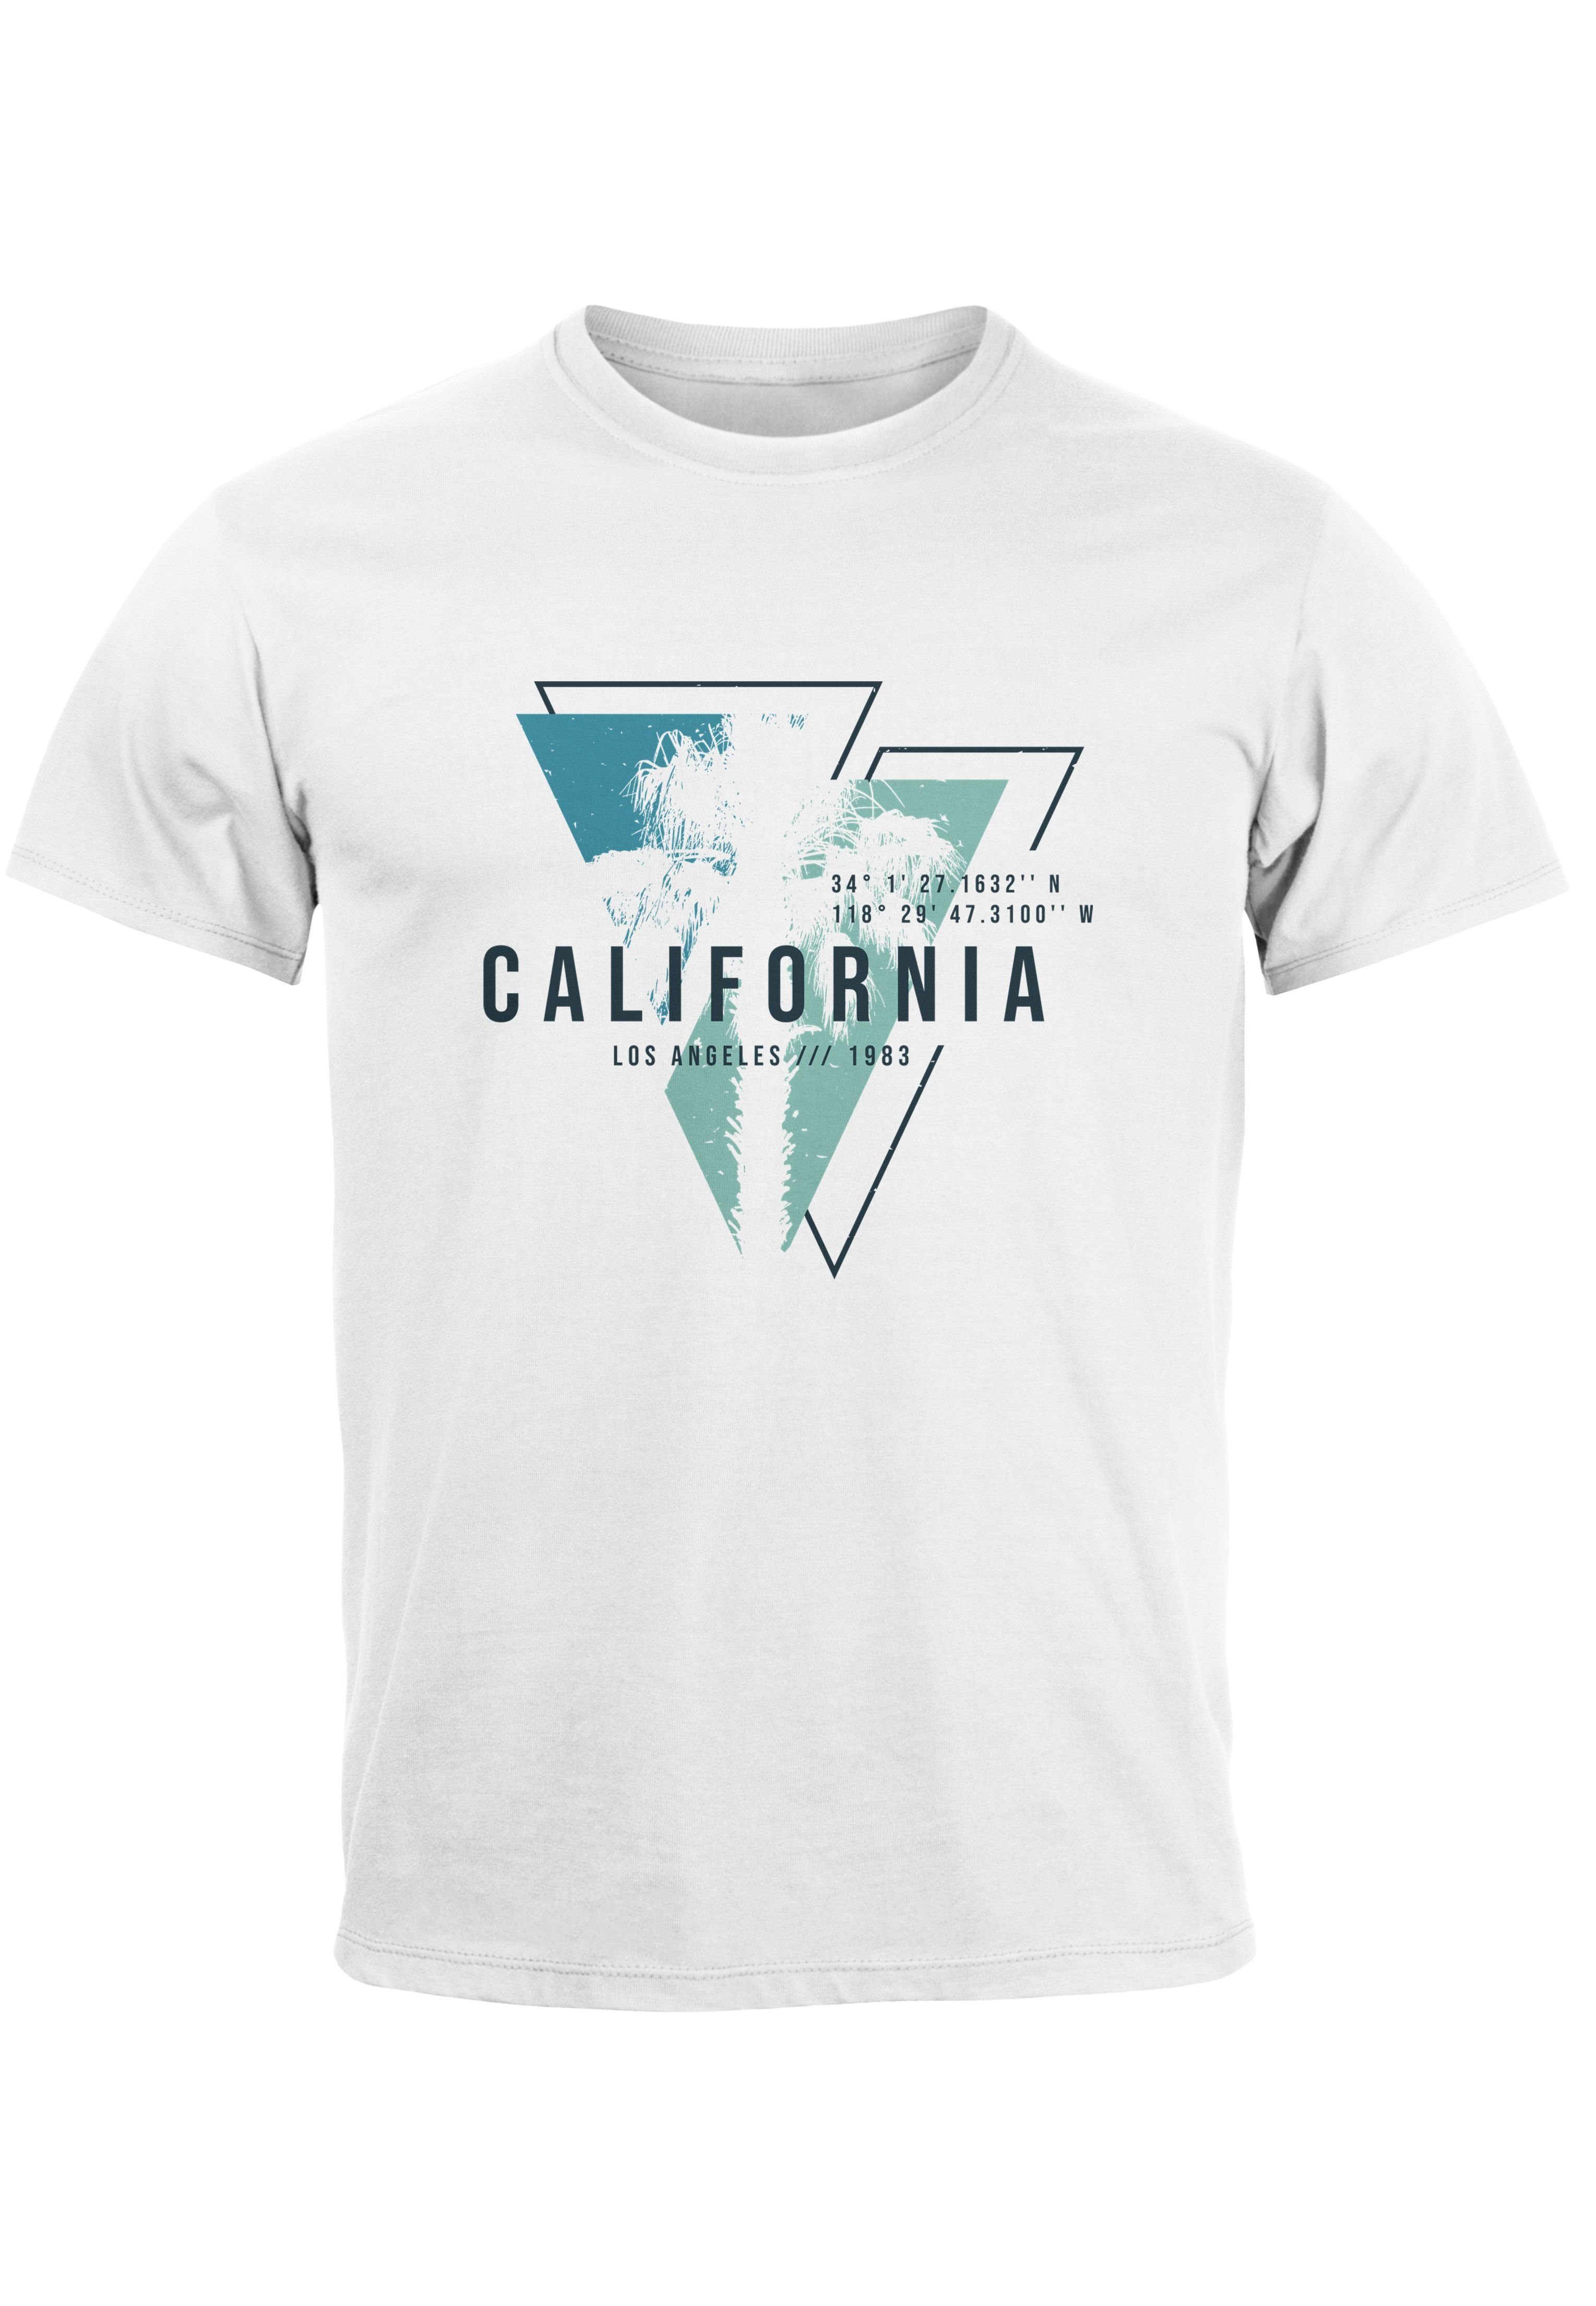 Los Fashion T-Shirt Print-Shirt USA Sommer weiß Herren mit Neverless Print Surfing Angeles Motiv California